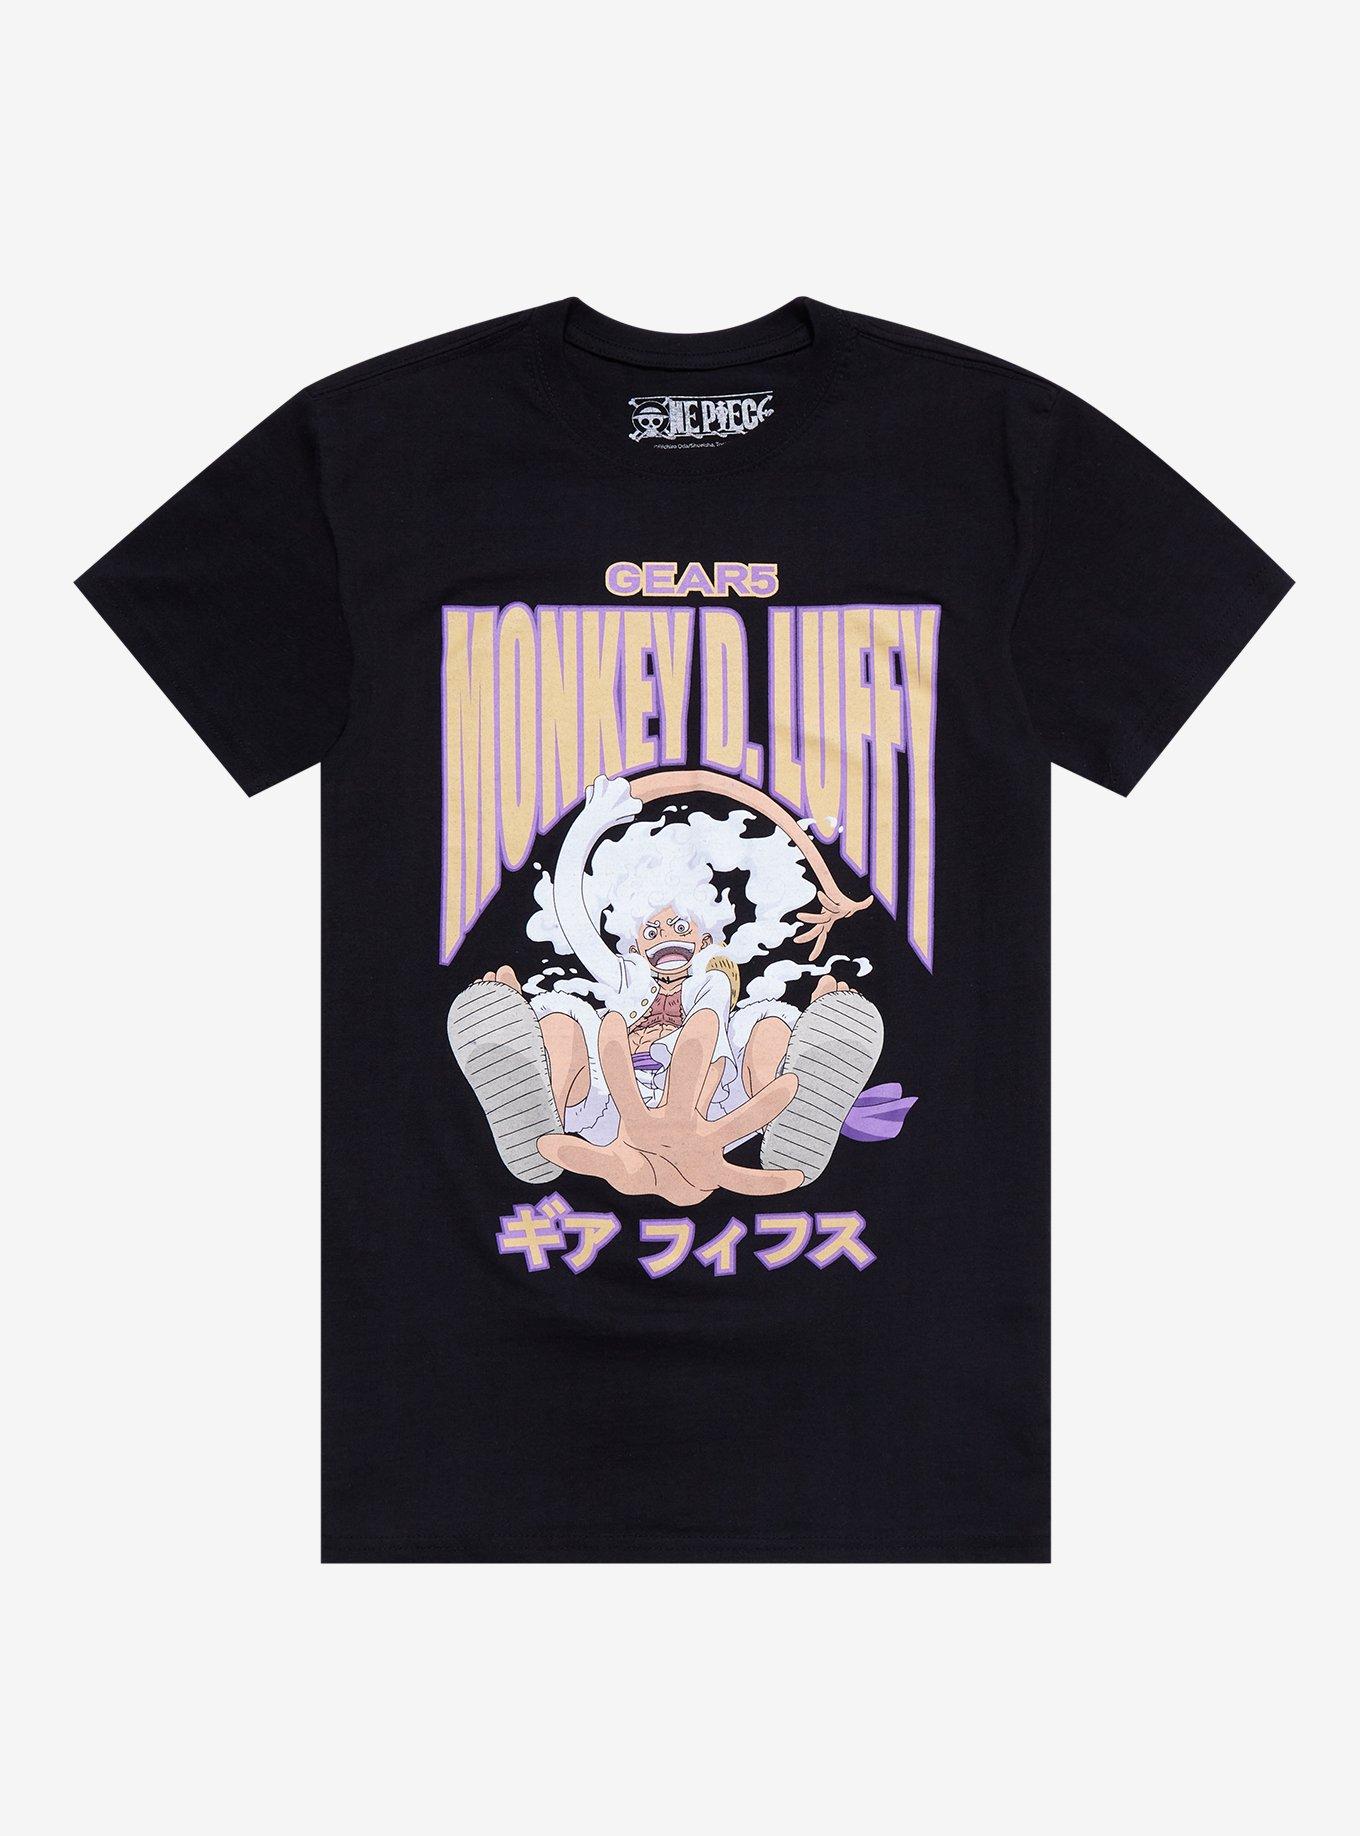 Luffy Gear 5 One Piece T-shirt Kids Boys Girls Clothes Children's Clothing  Kid Boy T Shirt Anime One Piece T-shirts Cartoon Tops